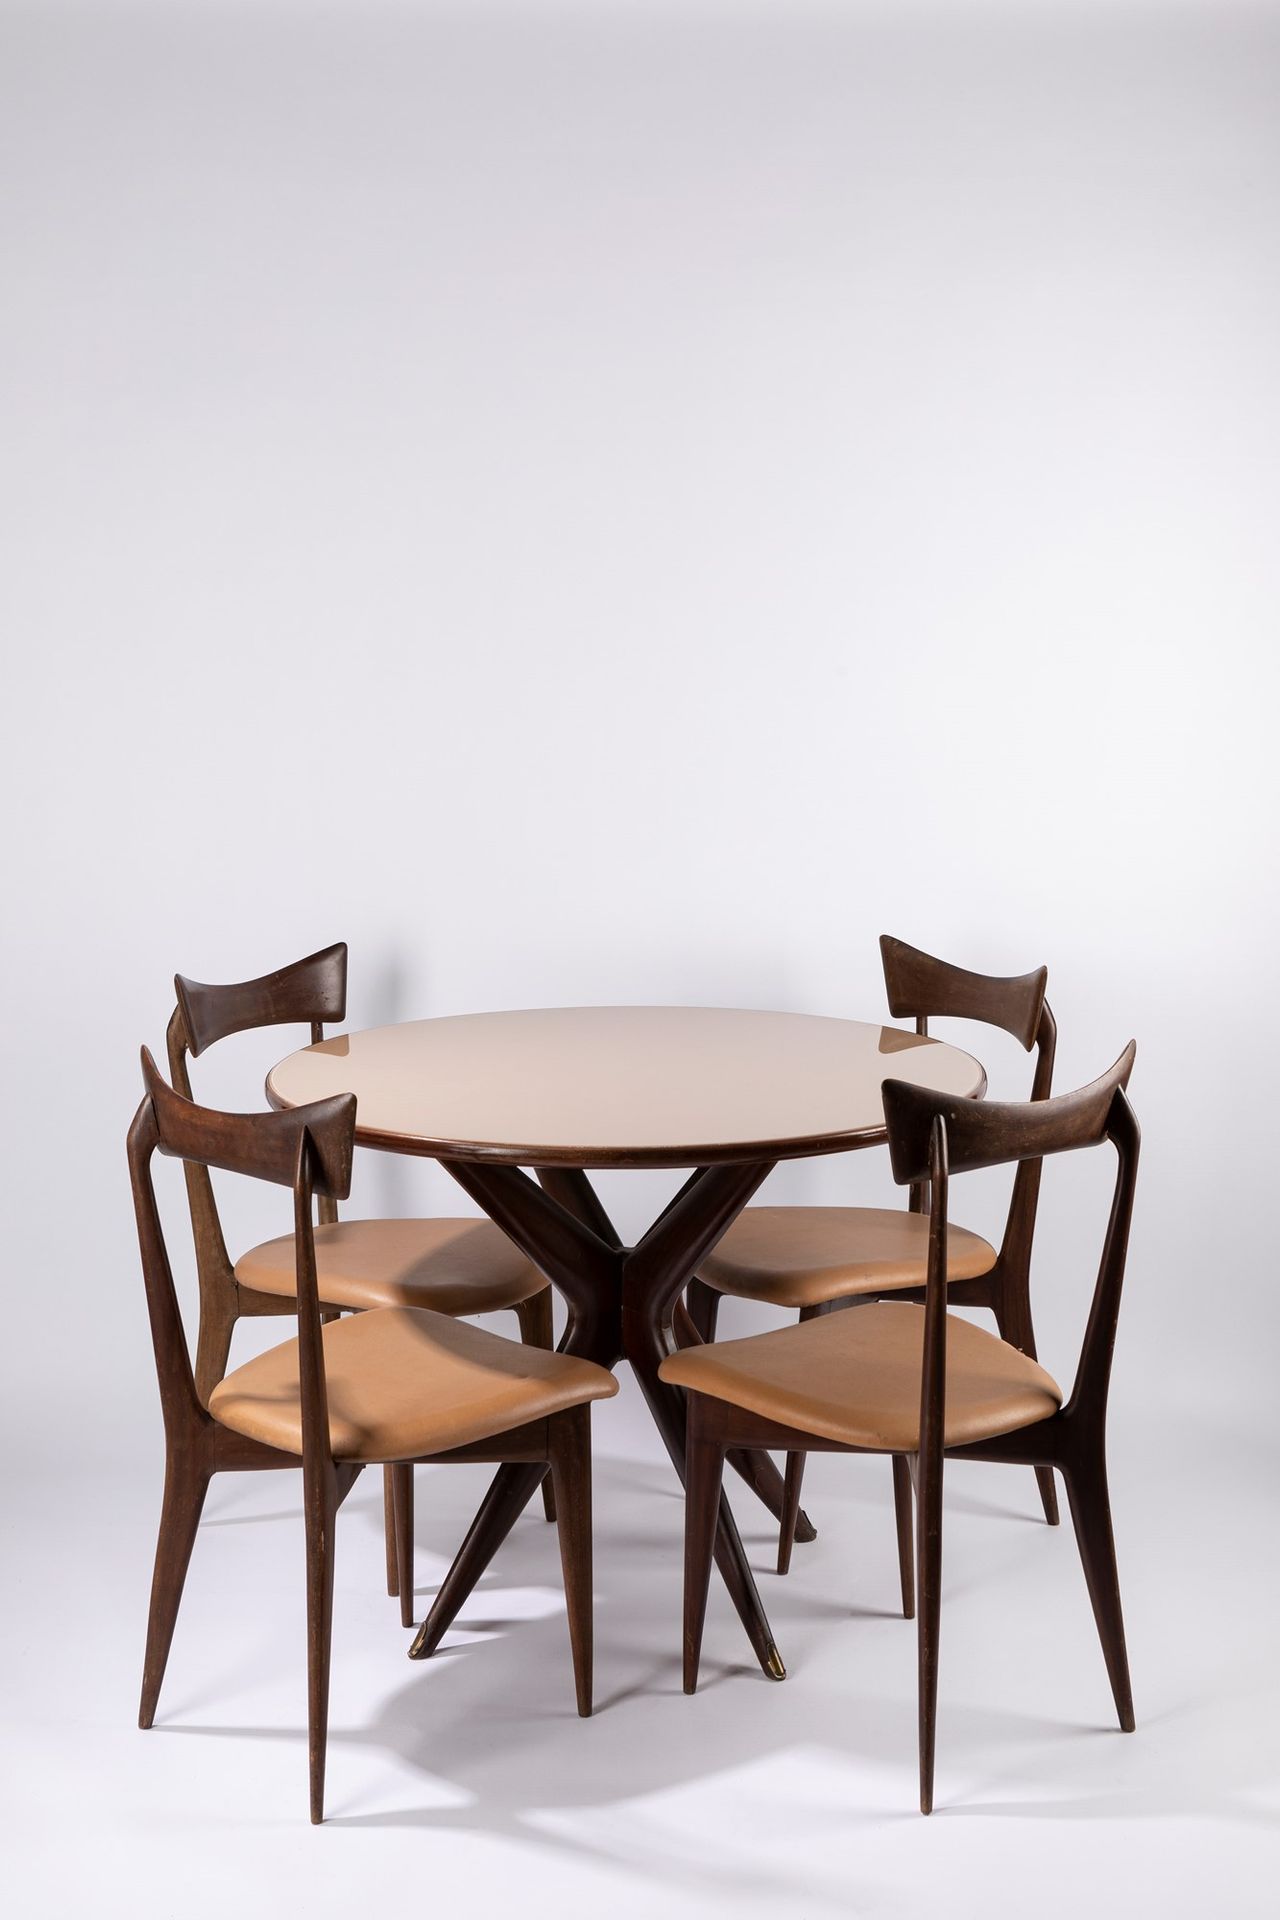 Ico & Luisa Parisi 桌子和四把椅子，1950年约

桌子高78 x 直径100厘米 - 椅子高87 x 44 x 47厘米
木制和黄铜的细节。&hellip;